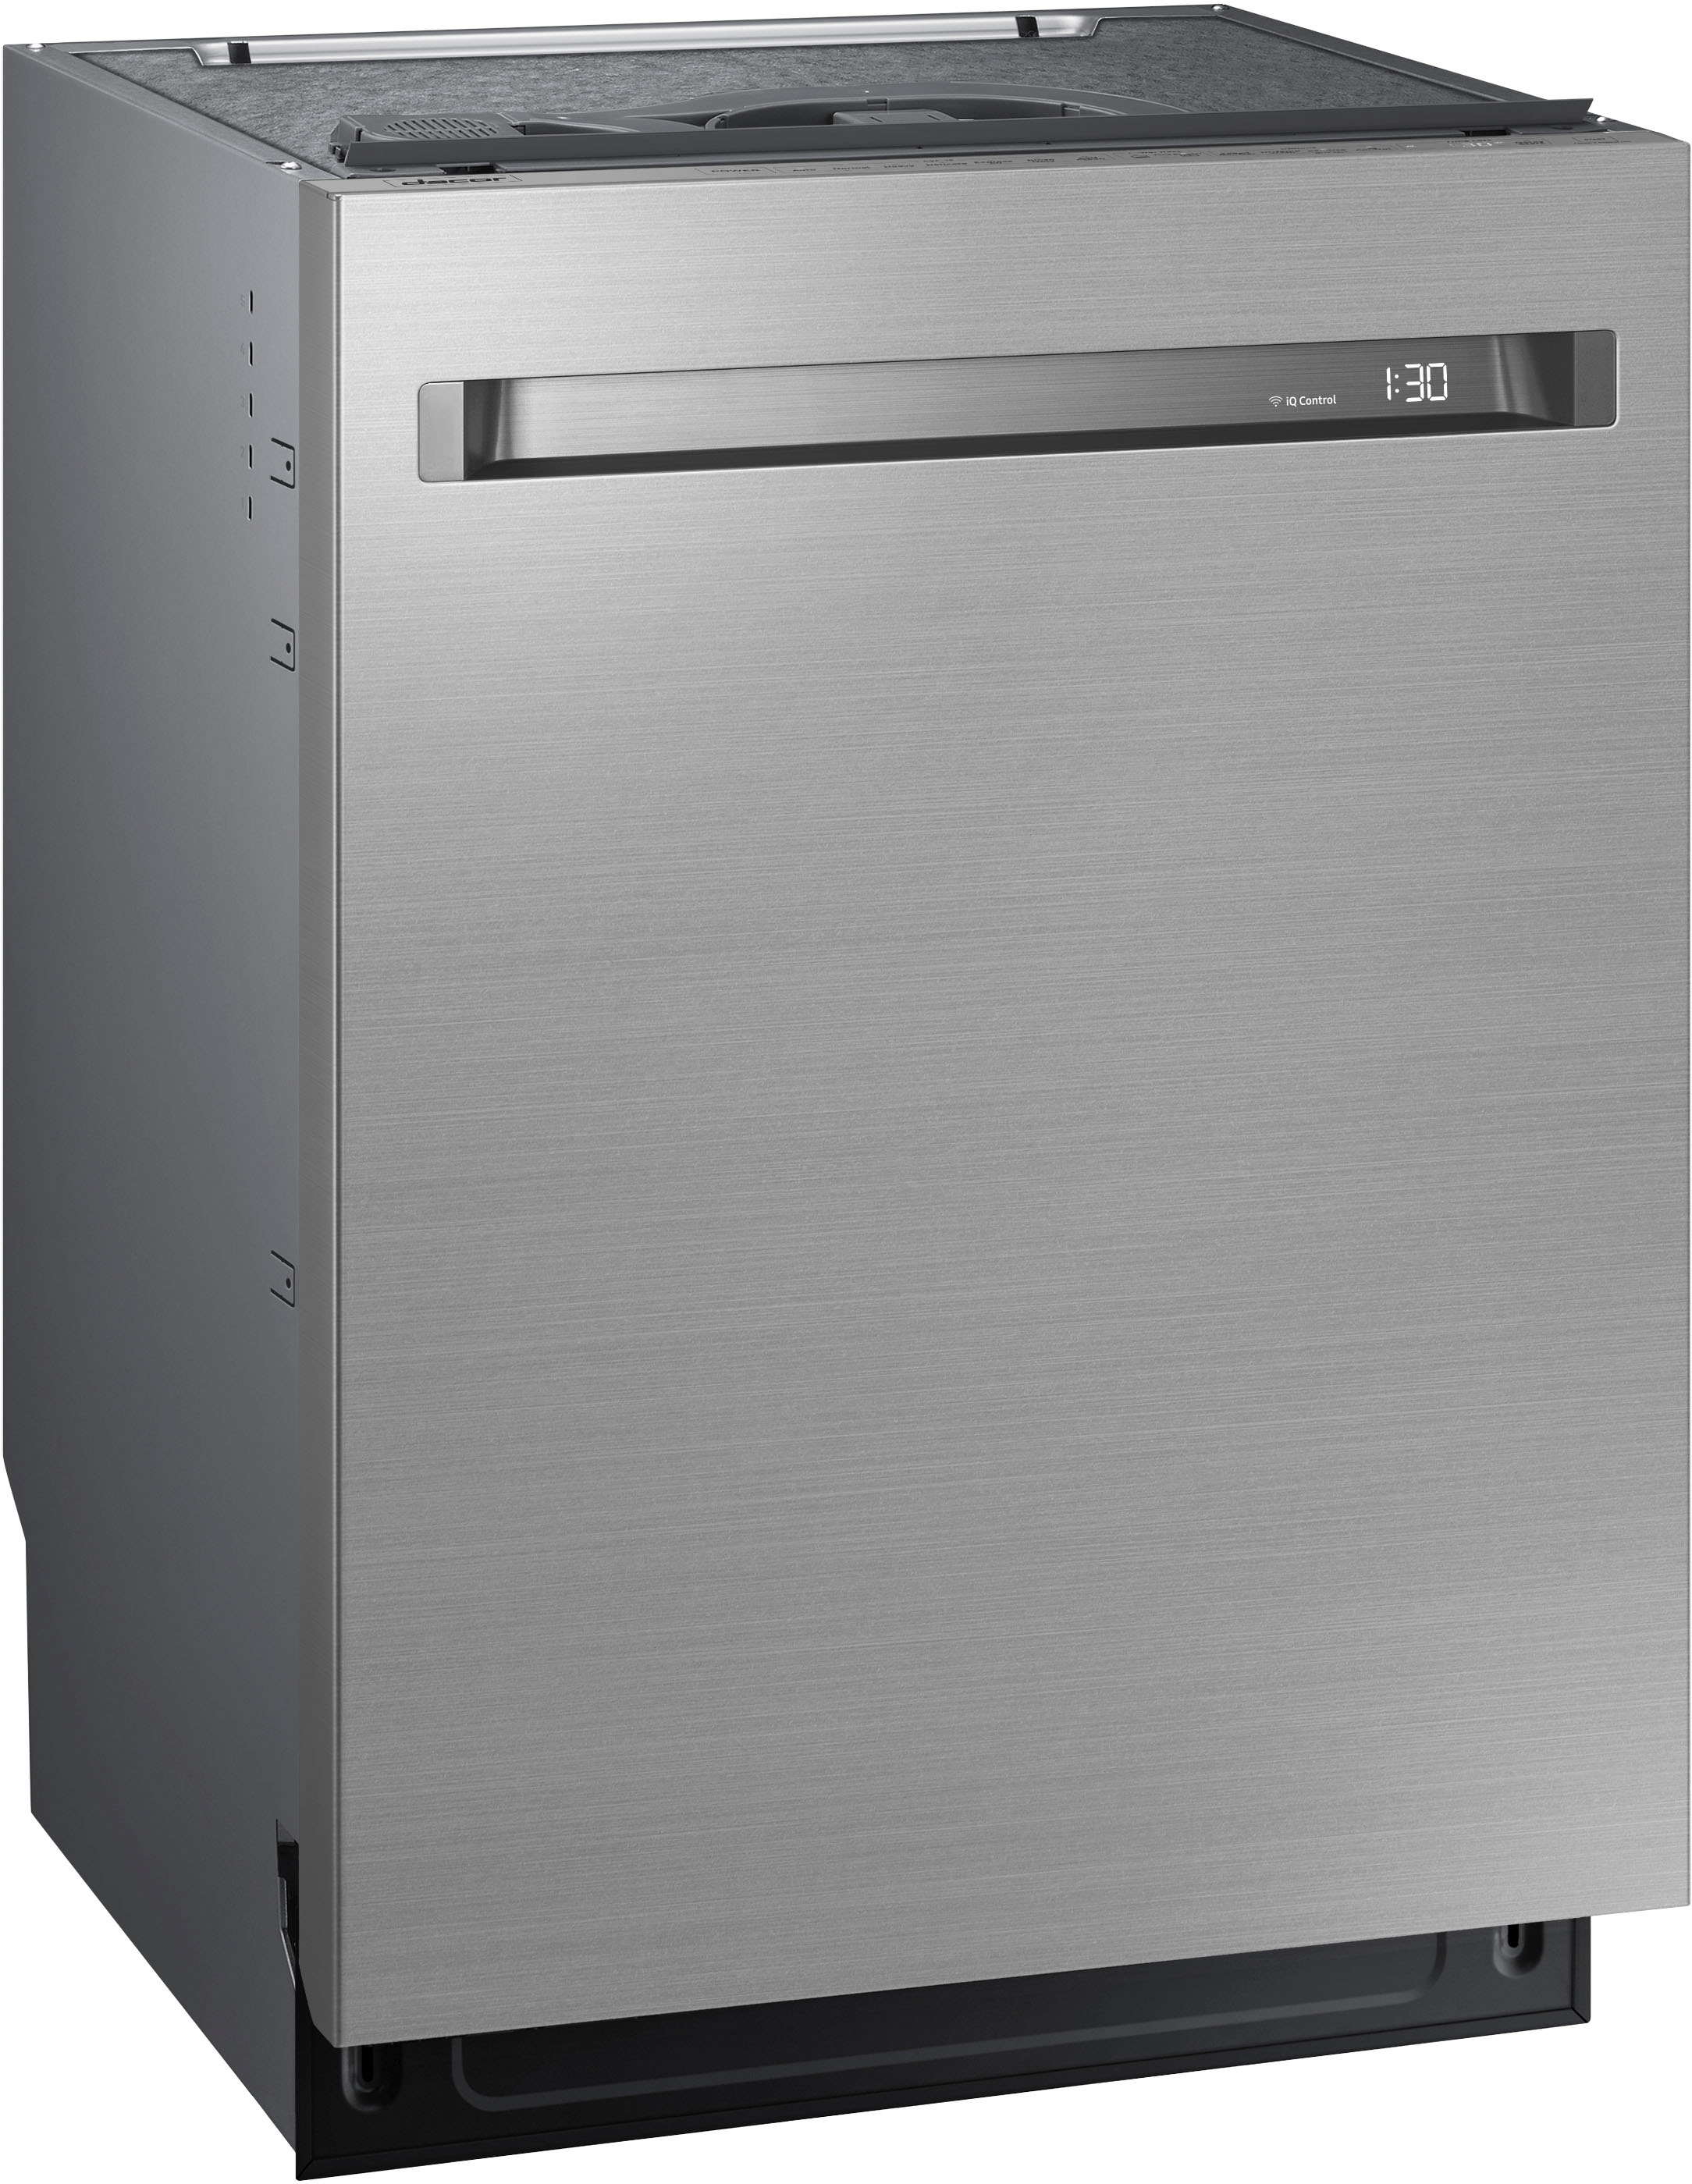 Left View: KitchenAid - 24" Built-In Dishwasher - Black stainless steel